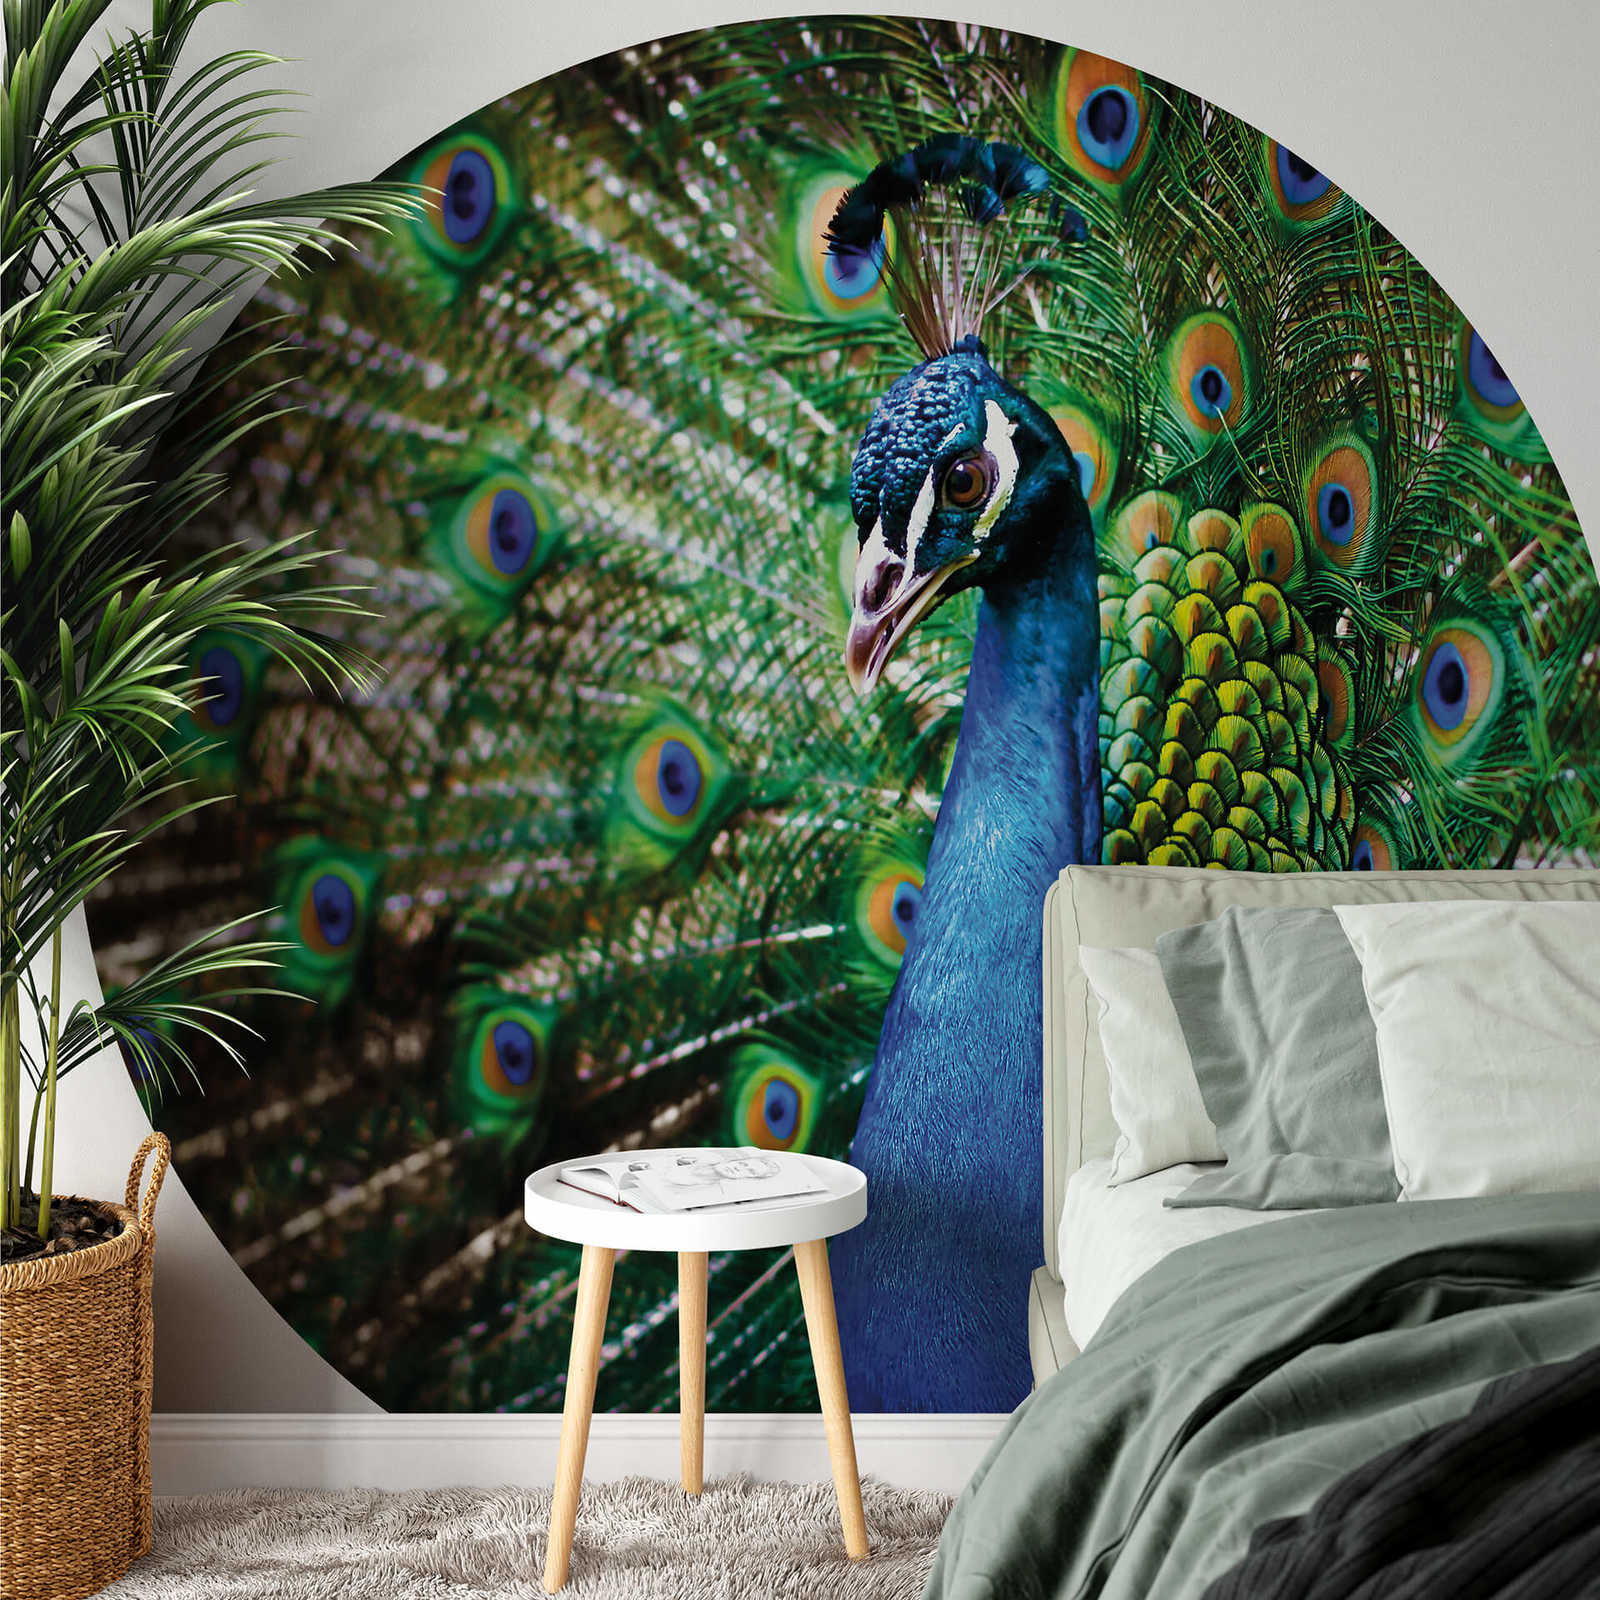             Photo wallpaper round peacock - green, blue, yellow
        